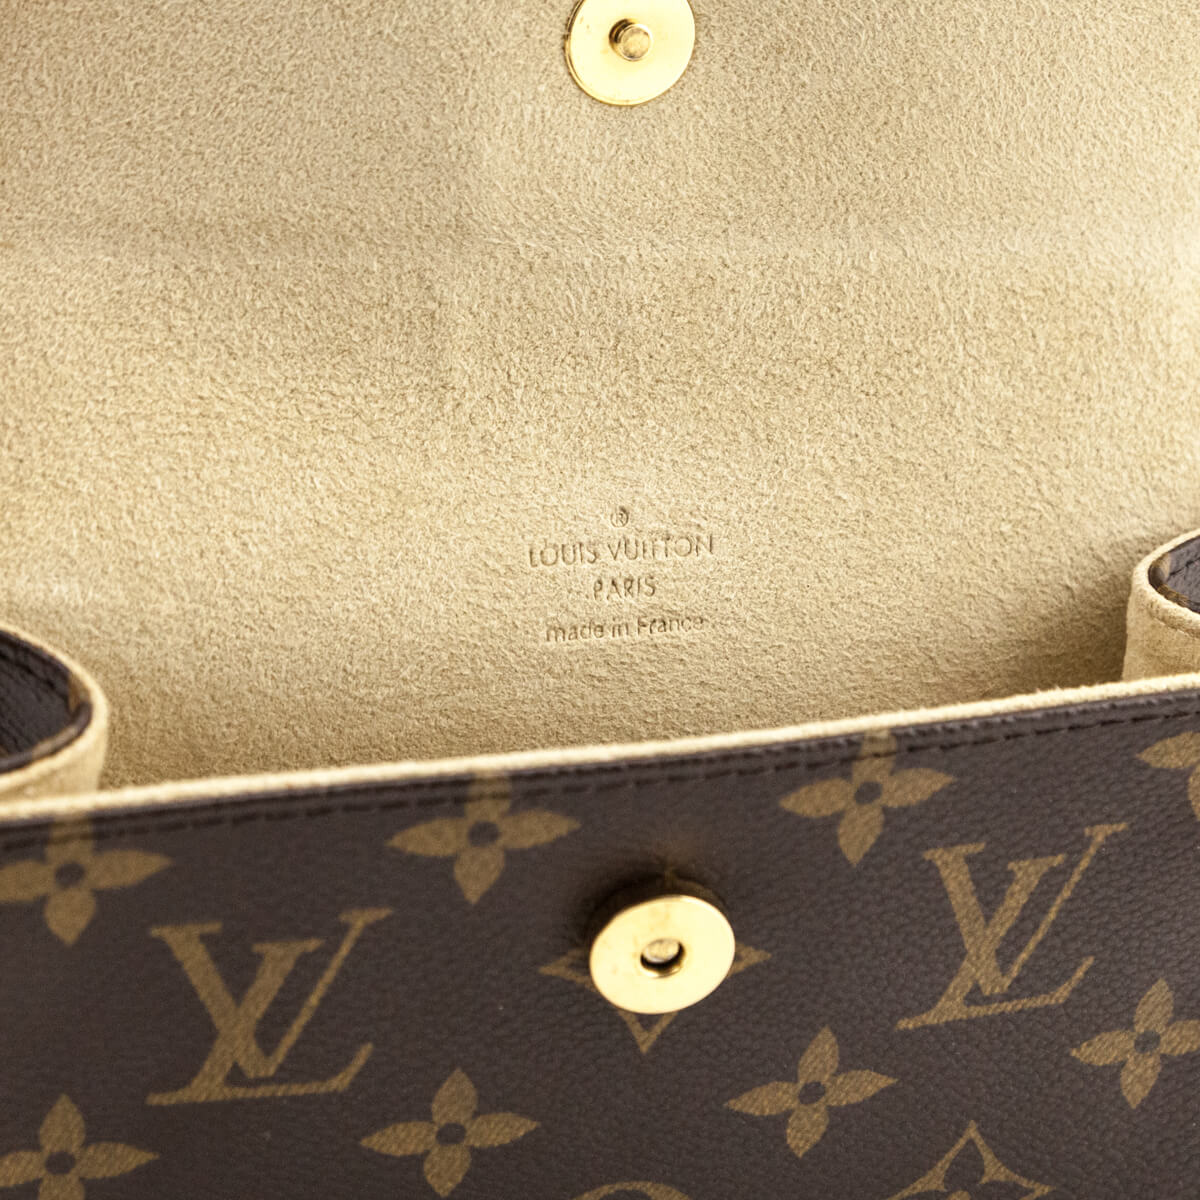 KOMEHYO, LOUIS VUITTON Monogram Pochette Florentine XS M51855+M67303 Waist  Bag, LOUIS VUITTON, Brand Bag, Waist Bag, Monogram